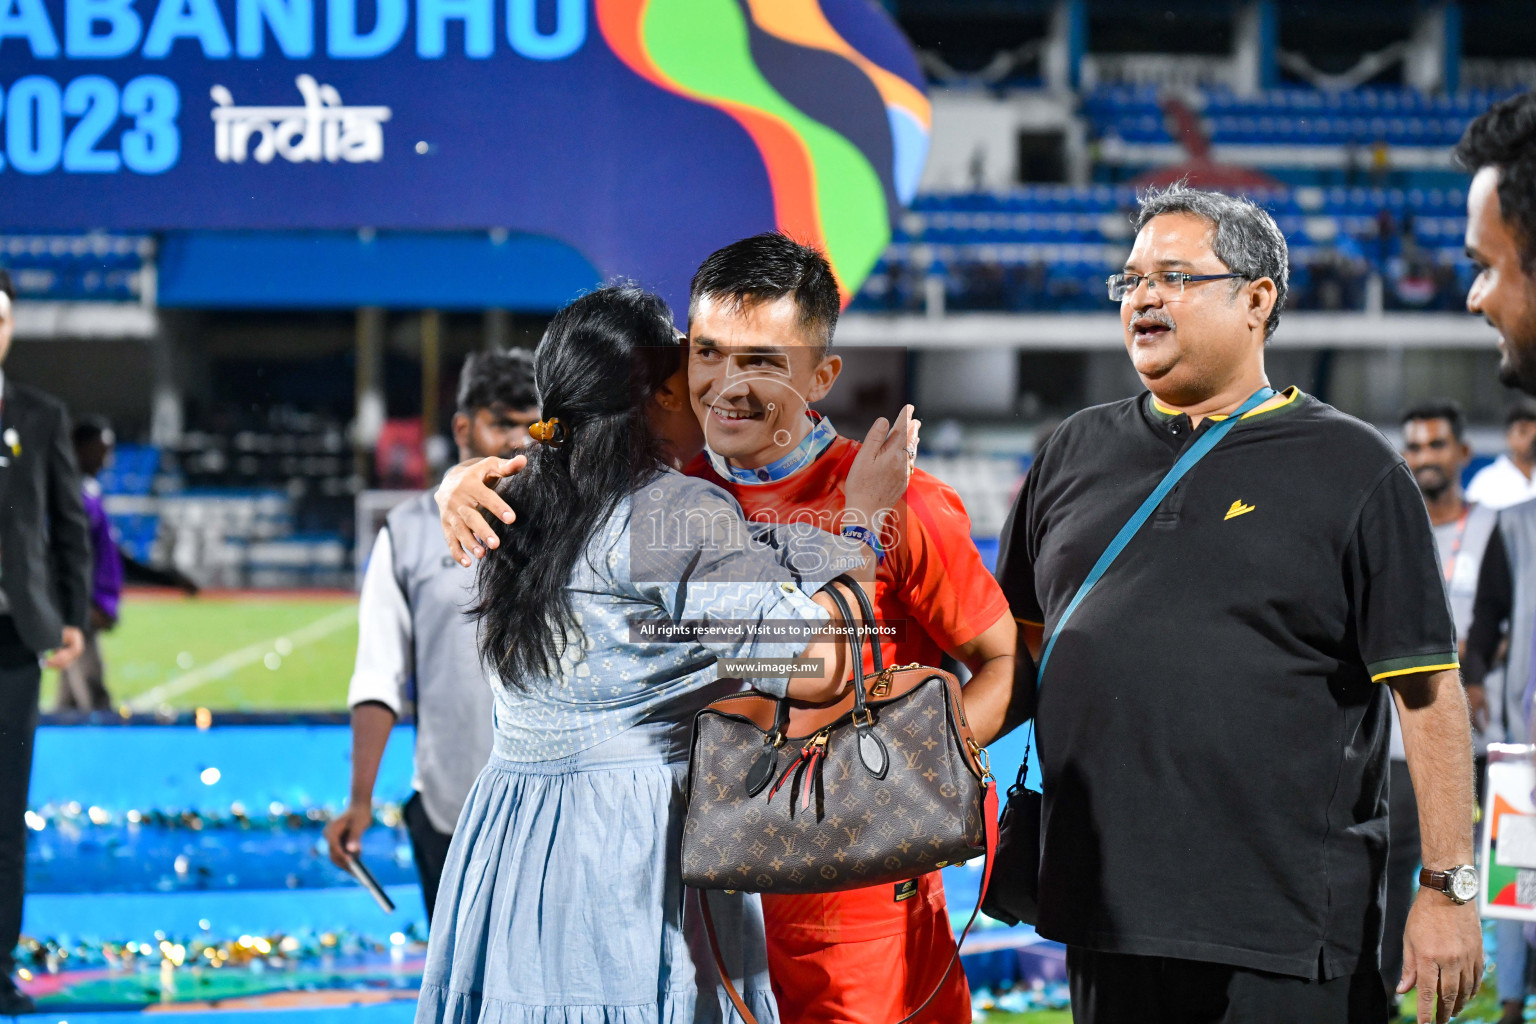 Kuwait vs India in the Final of SAFF Championship 2023 held in Sree Kanteerava Stadium, Bengaluru, India, on Tuesday, 4th July 2023. Photos: Nausham Waheed, Hassan Simah / images.mv